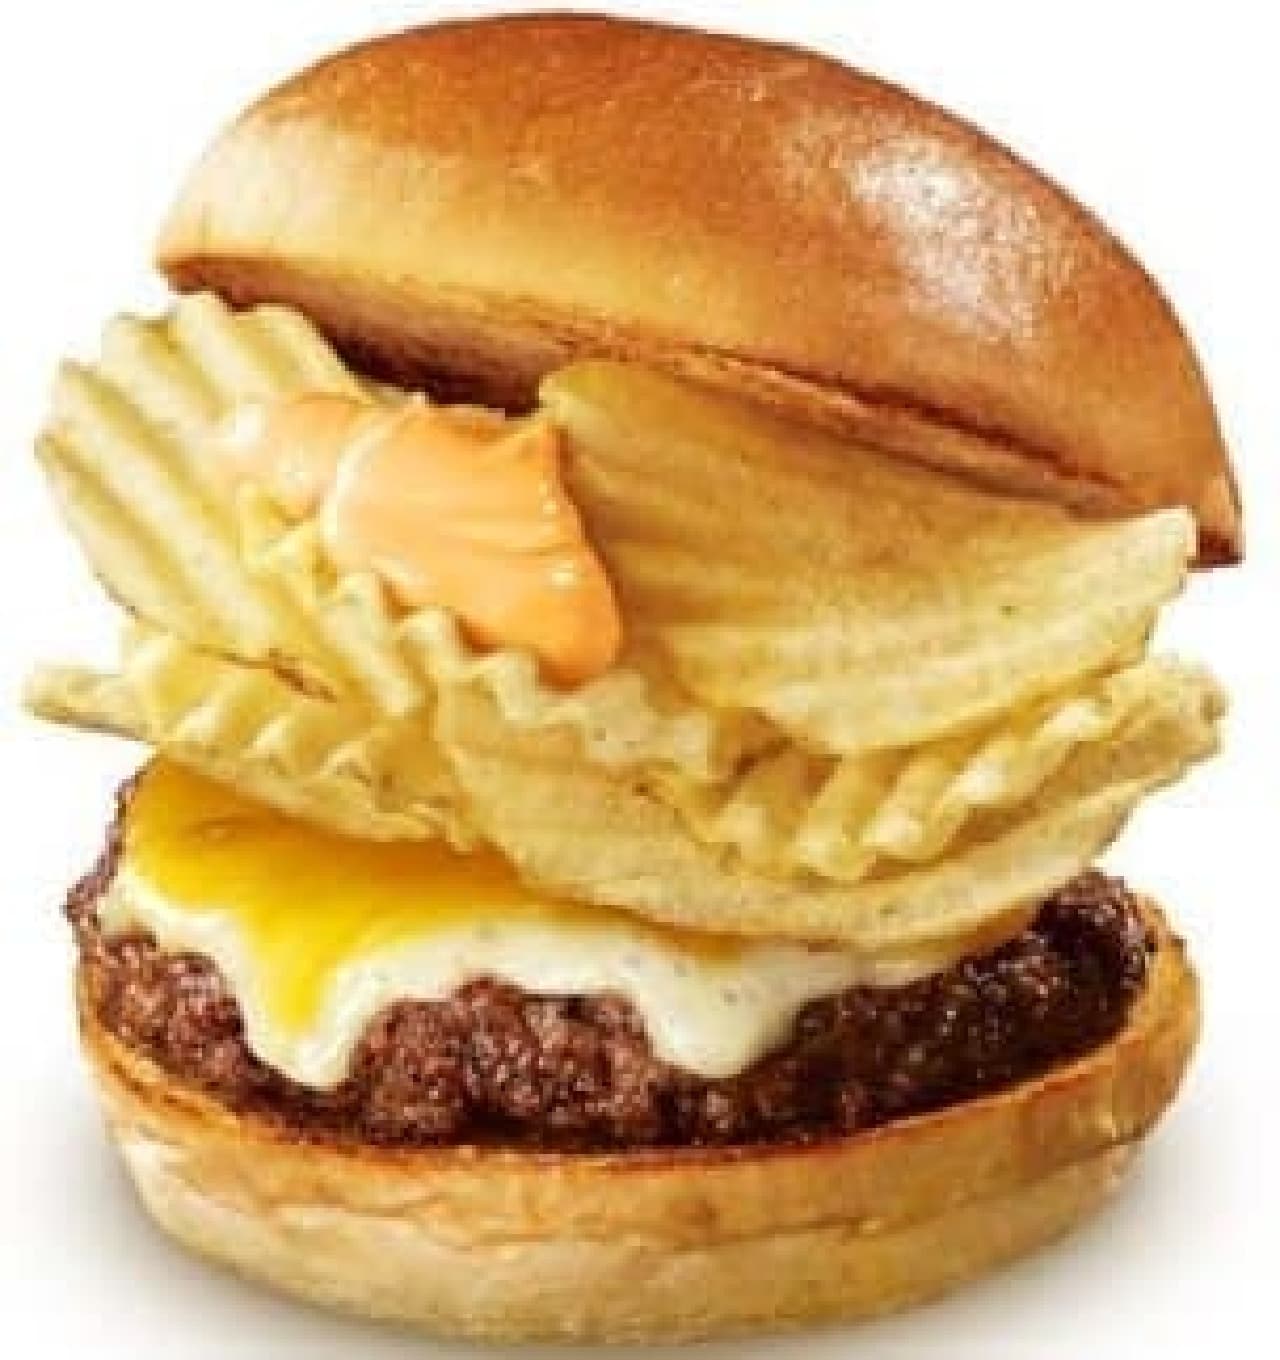 Exquisite Cheese Potato Chips Burger (Exquisite Cheeseburger Sauce)